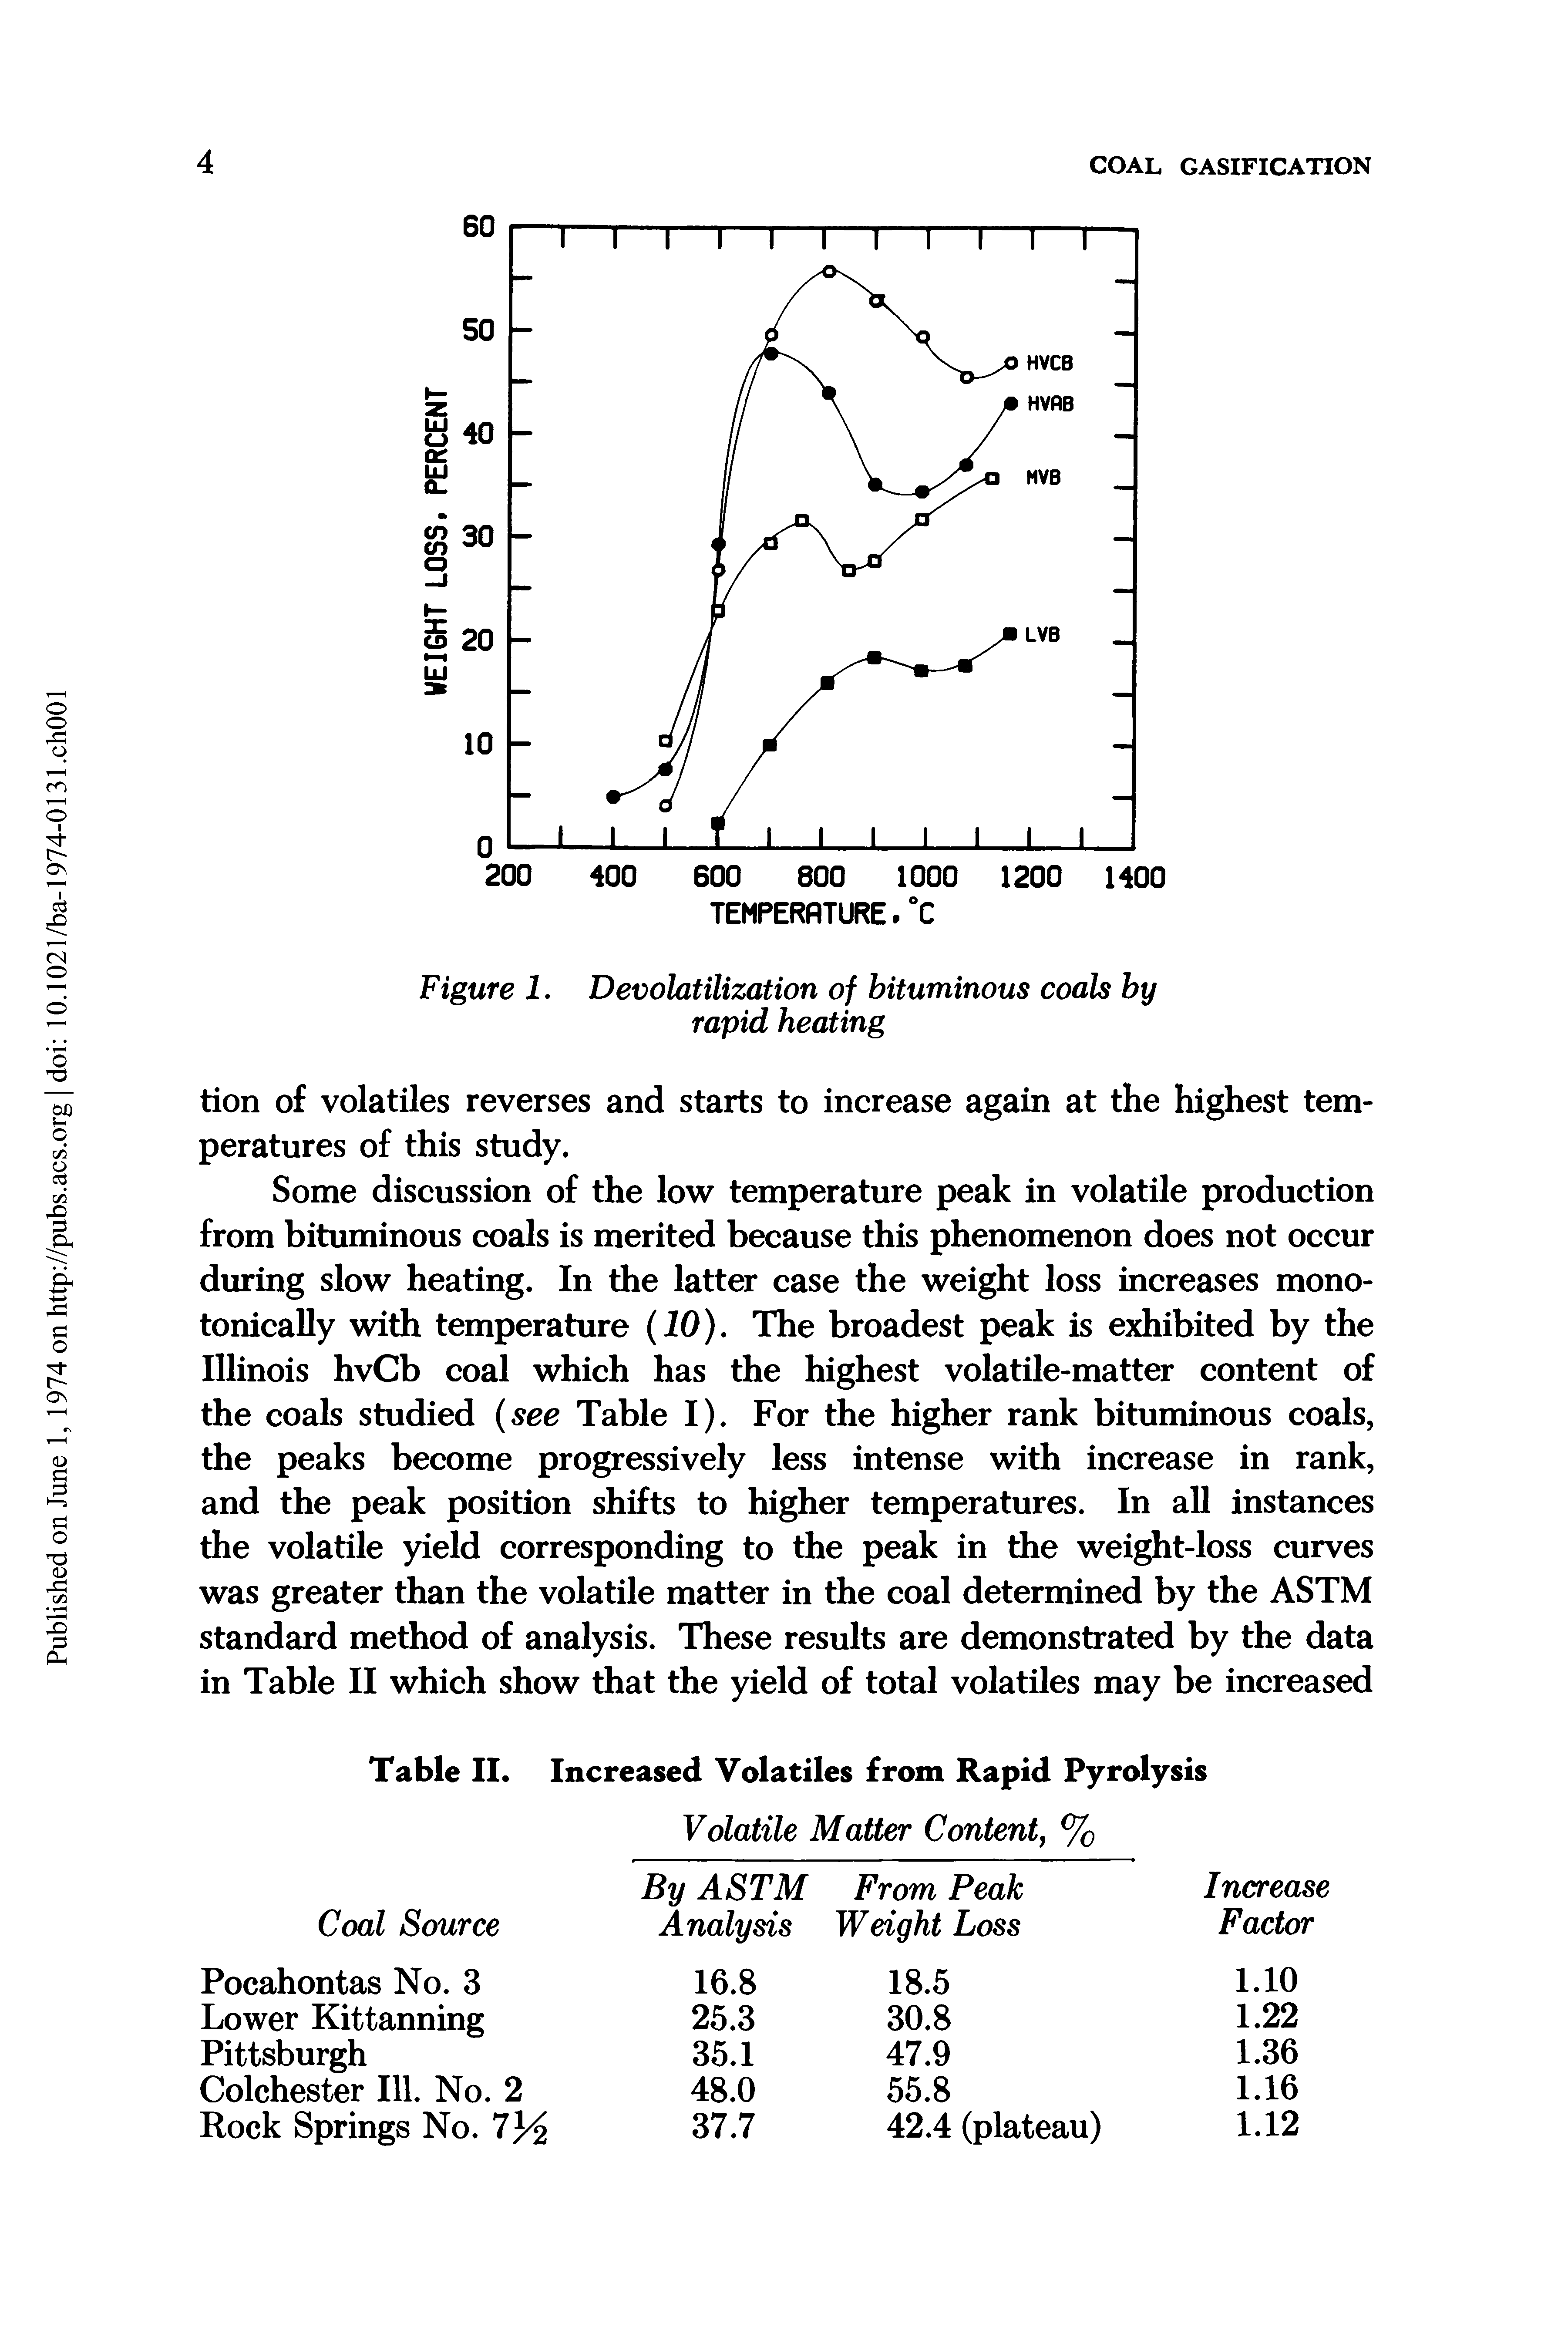 Figure 1. Devolatilization of bituminous coals by rapid heating...